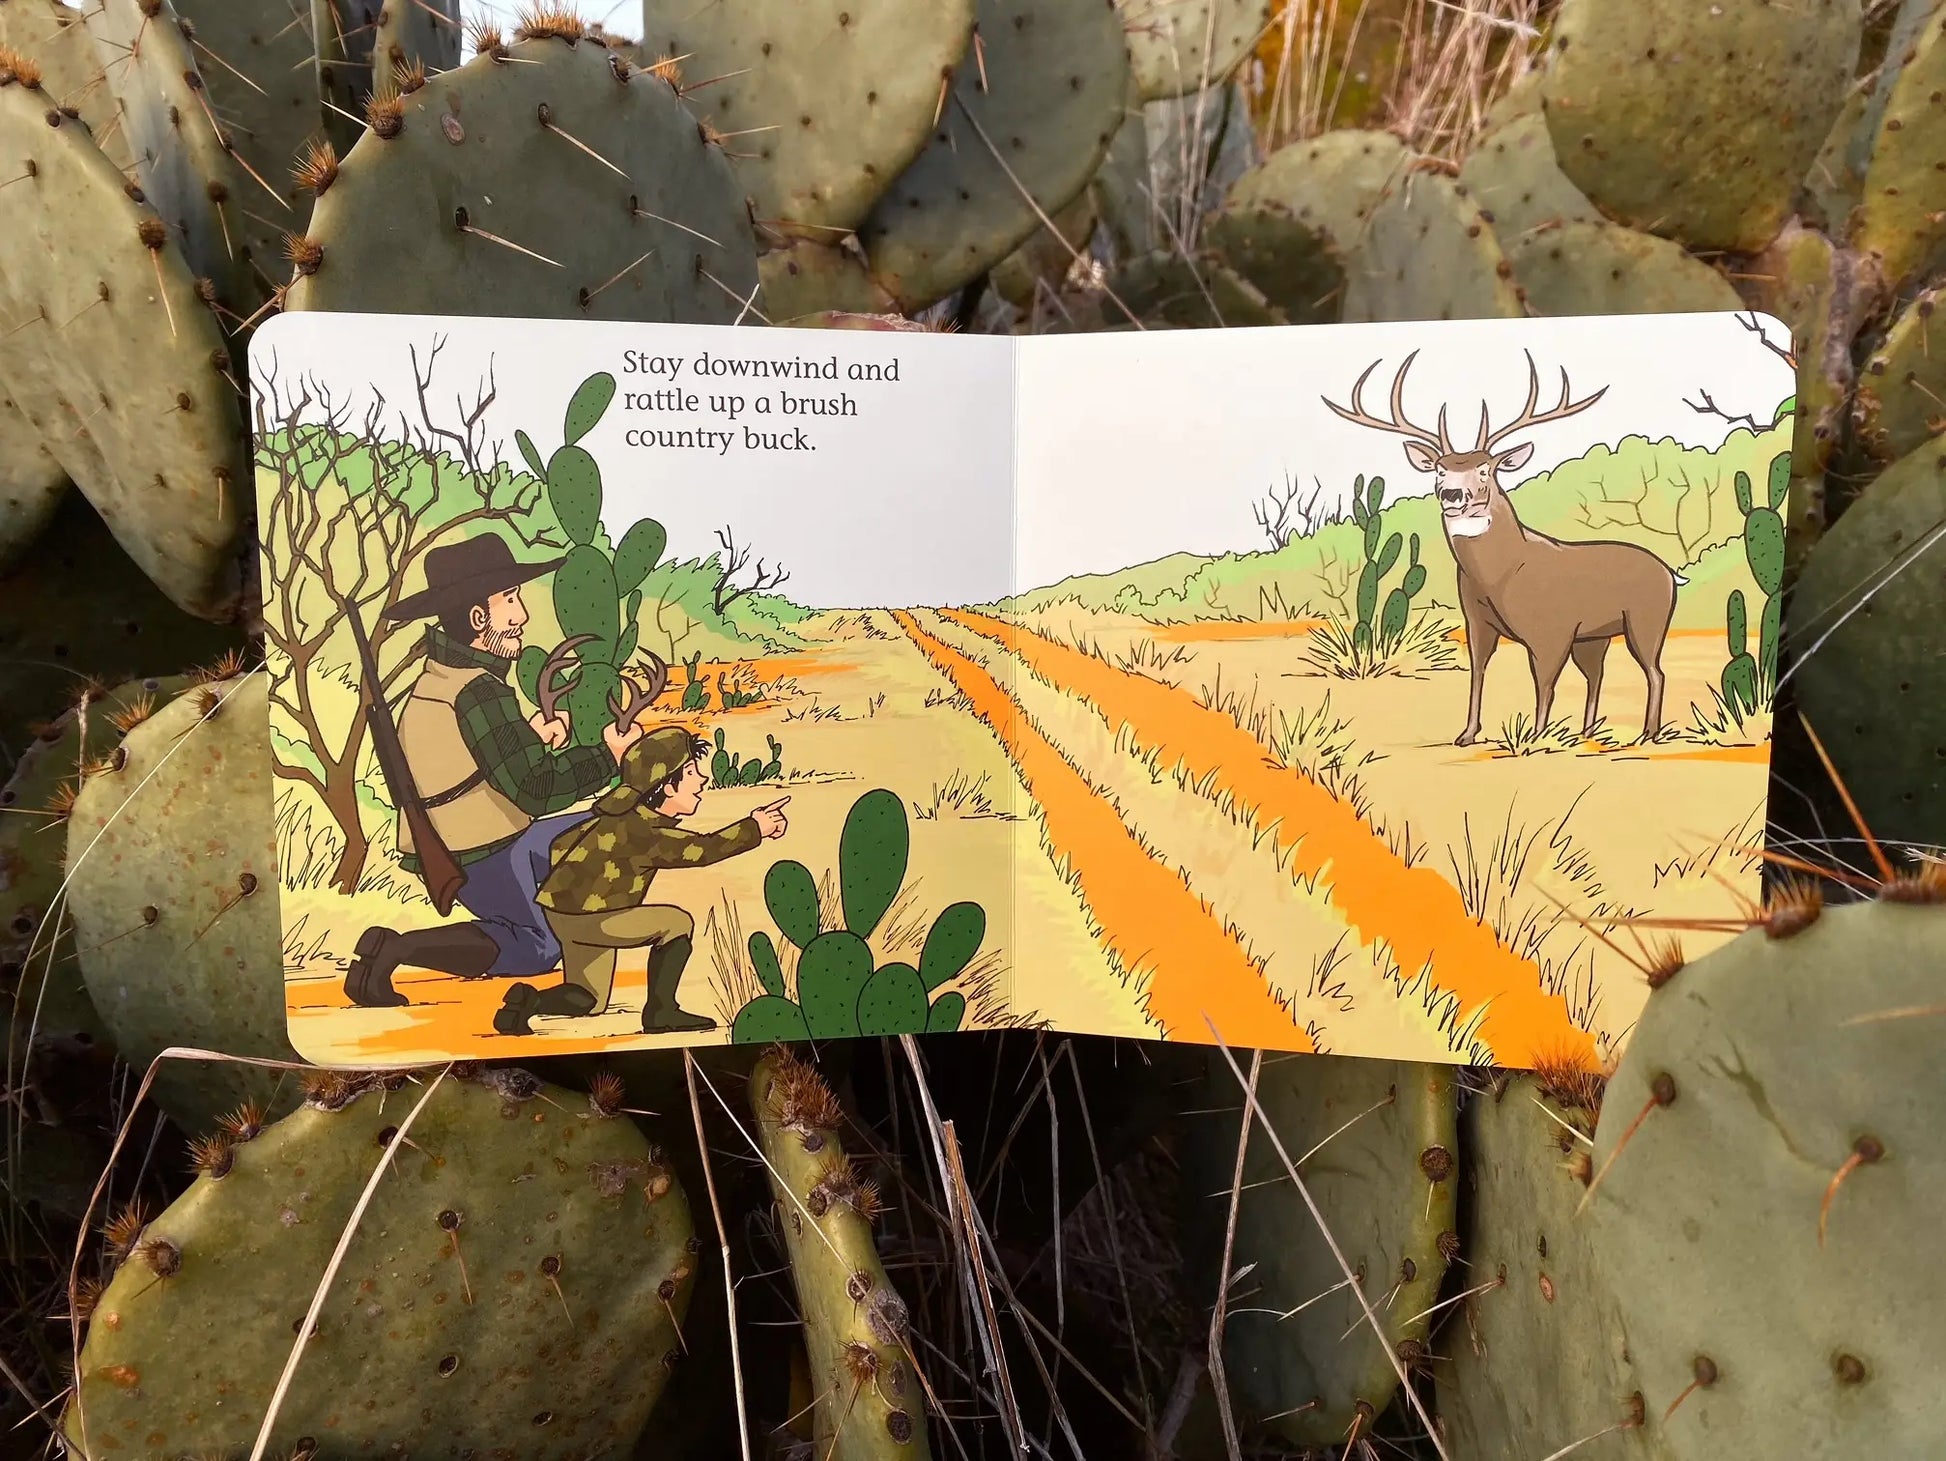 Good Luck Hunters Book  - Doodlebug's Children's Boutique